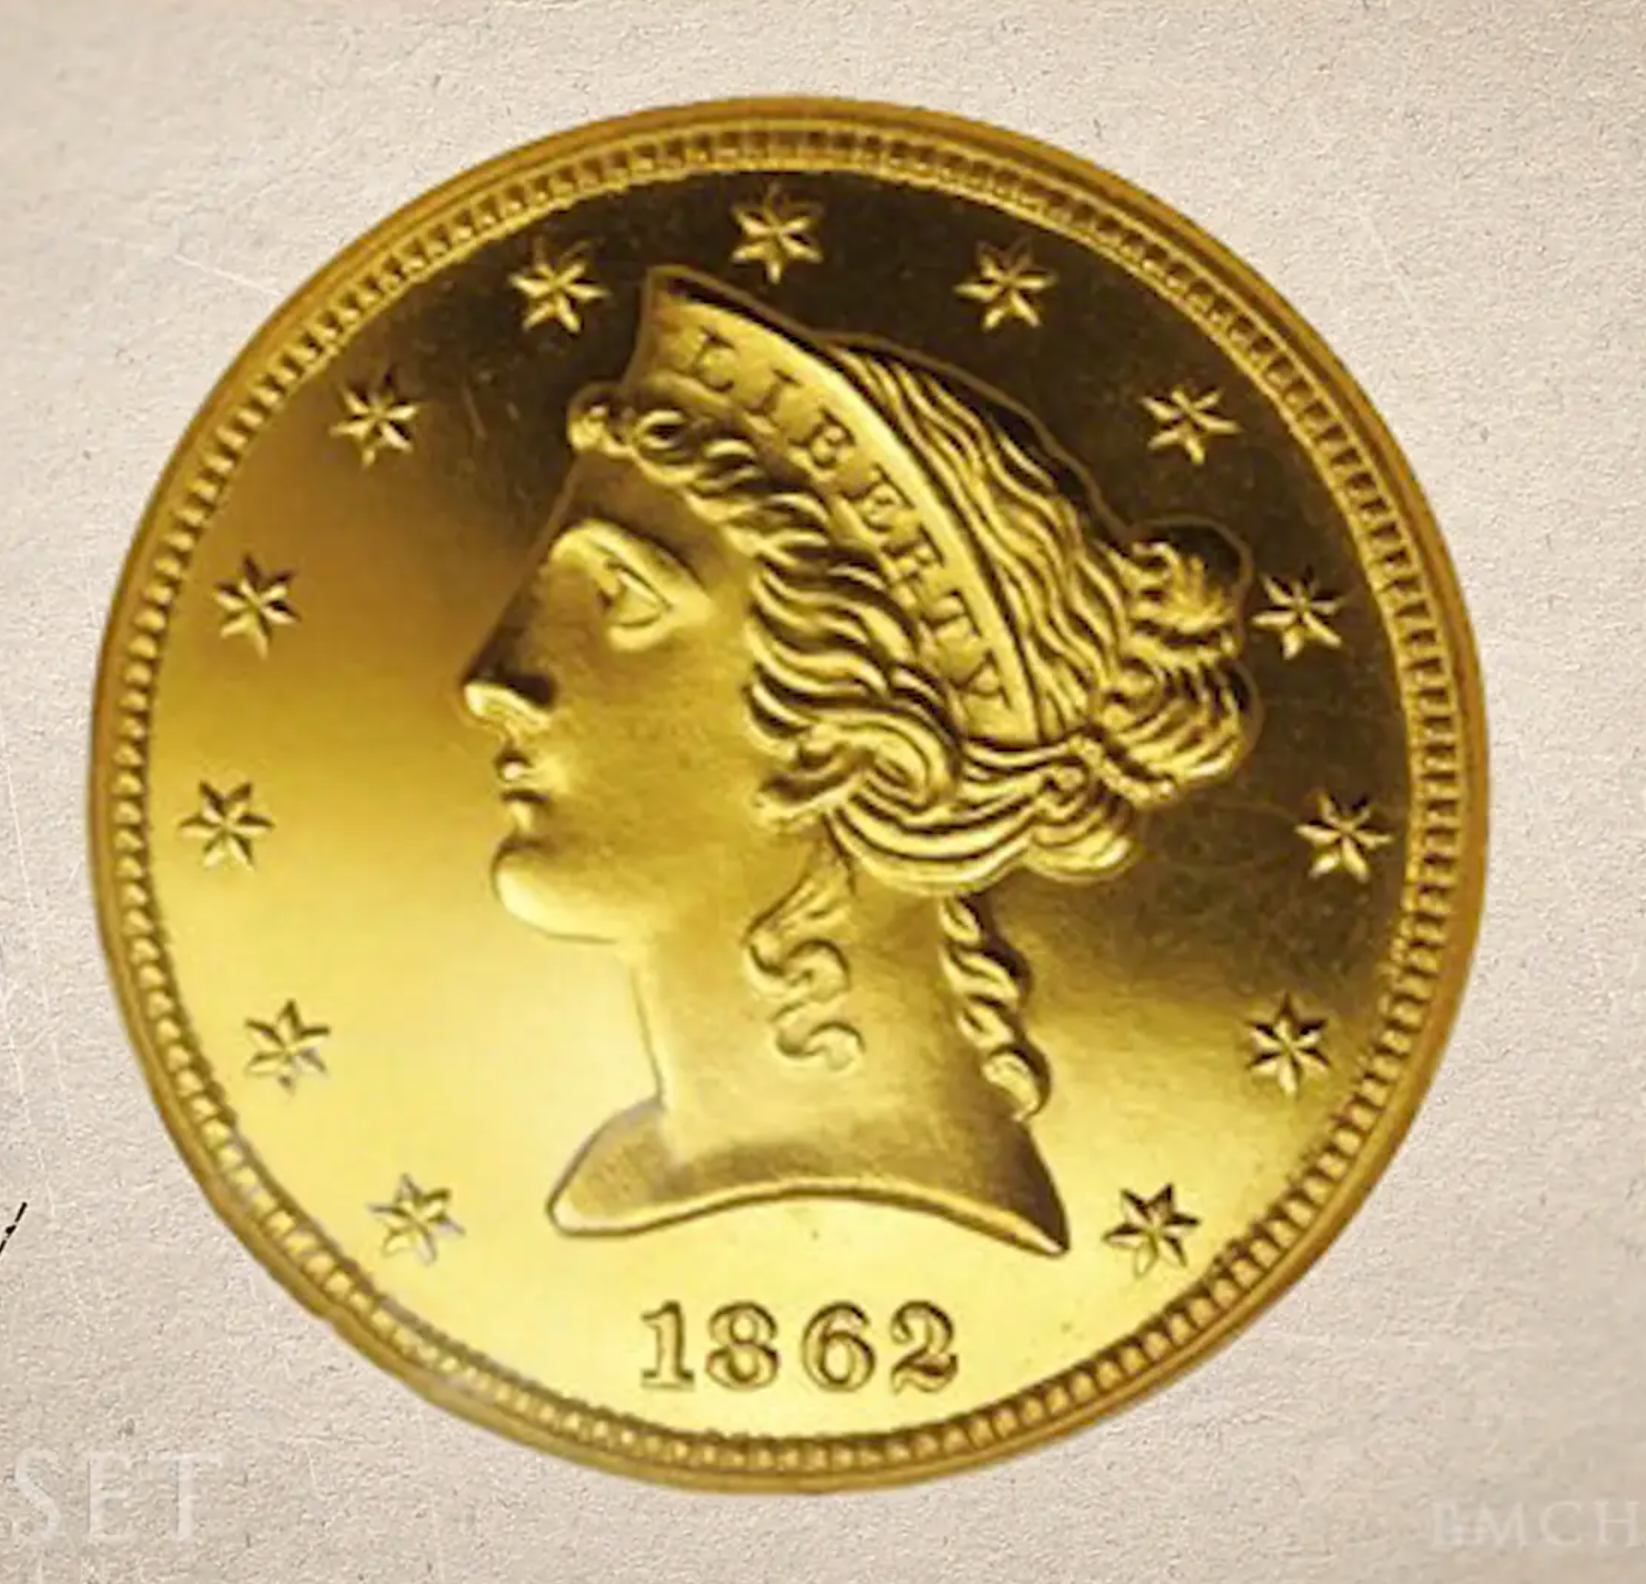 Liberty Head $5 Half Eagle - A Coin Draped In Neoclassicism Art